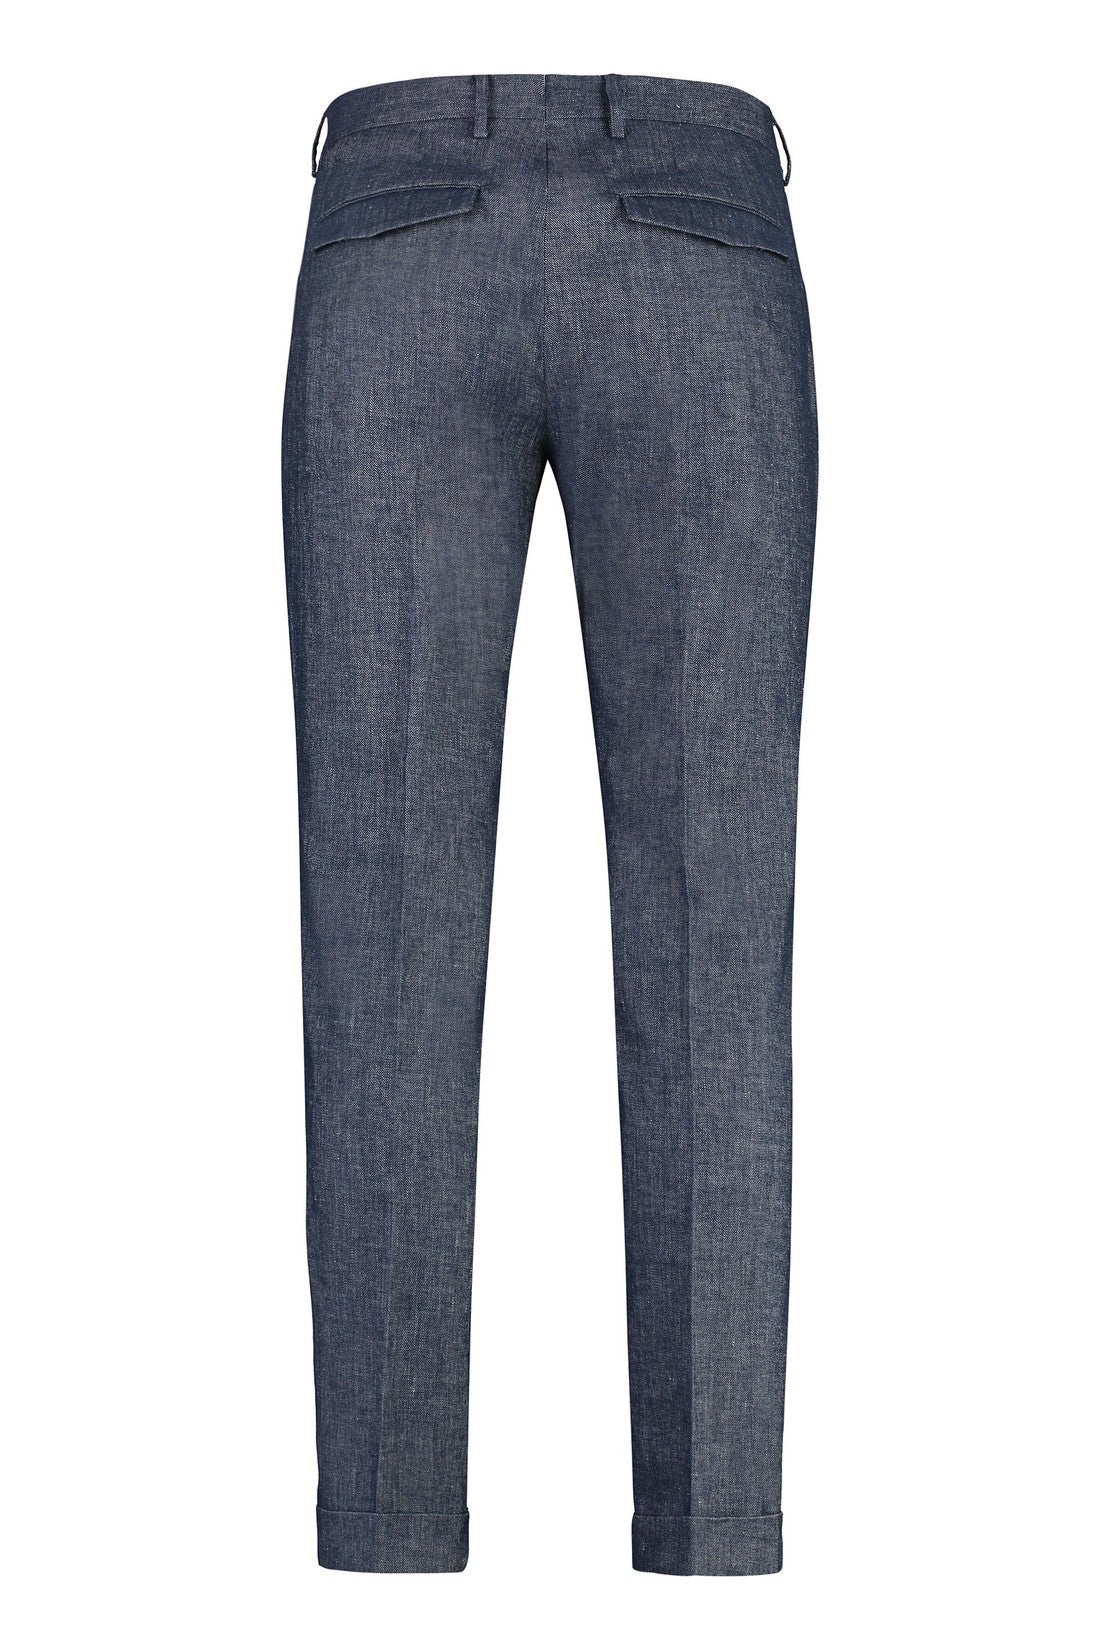 PT01 Pantaloni Torino-OUTLET-SALE-Slim fit chino trousers-ARCHIVIST